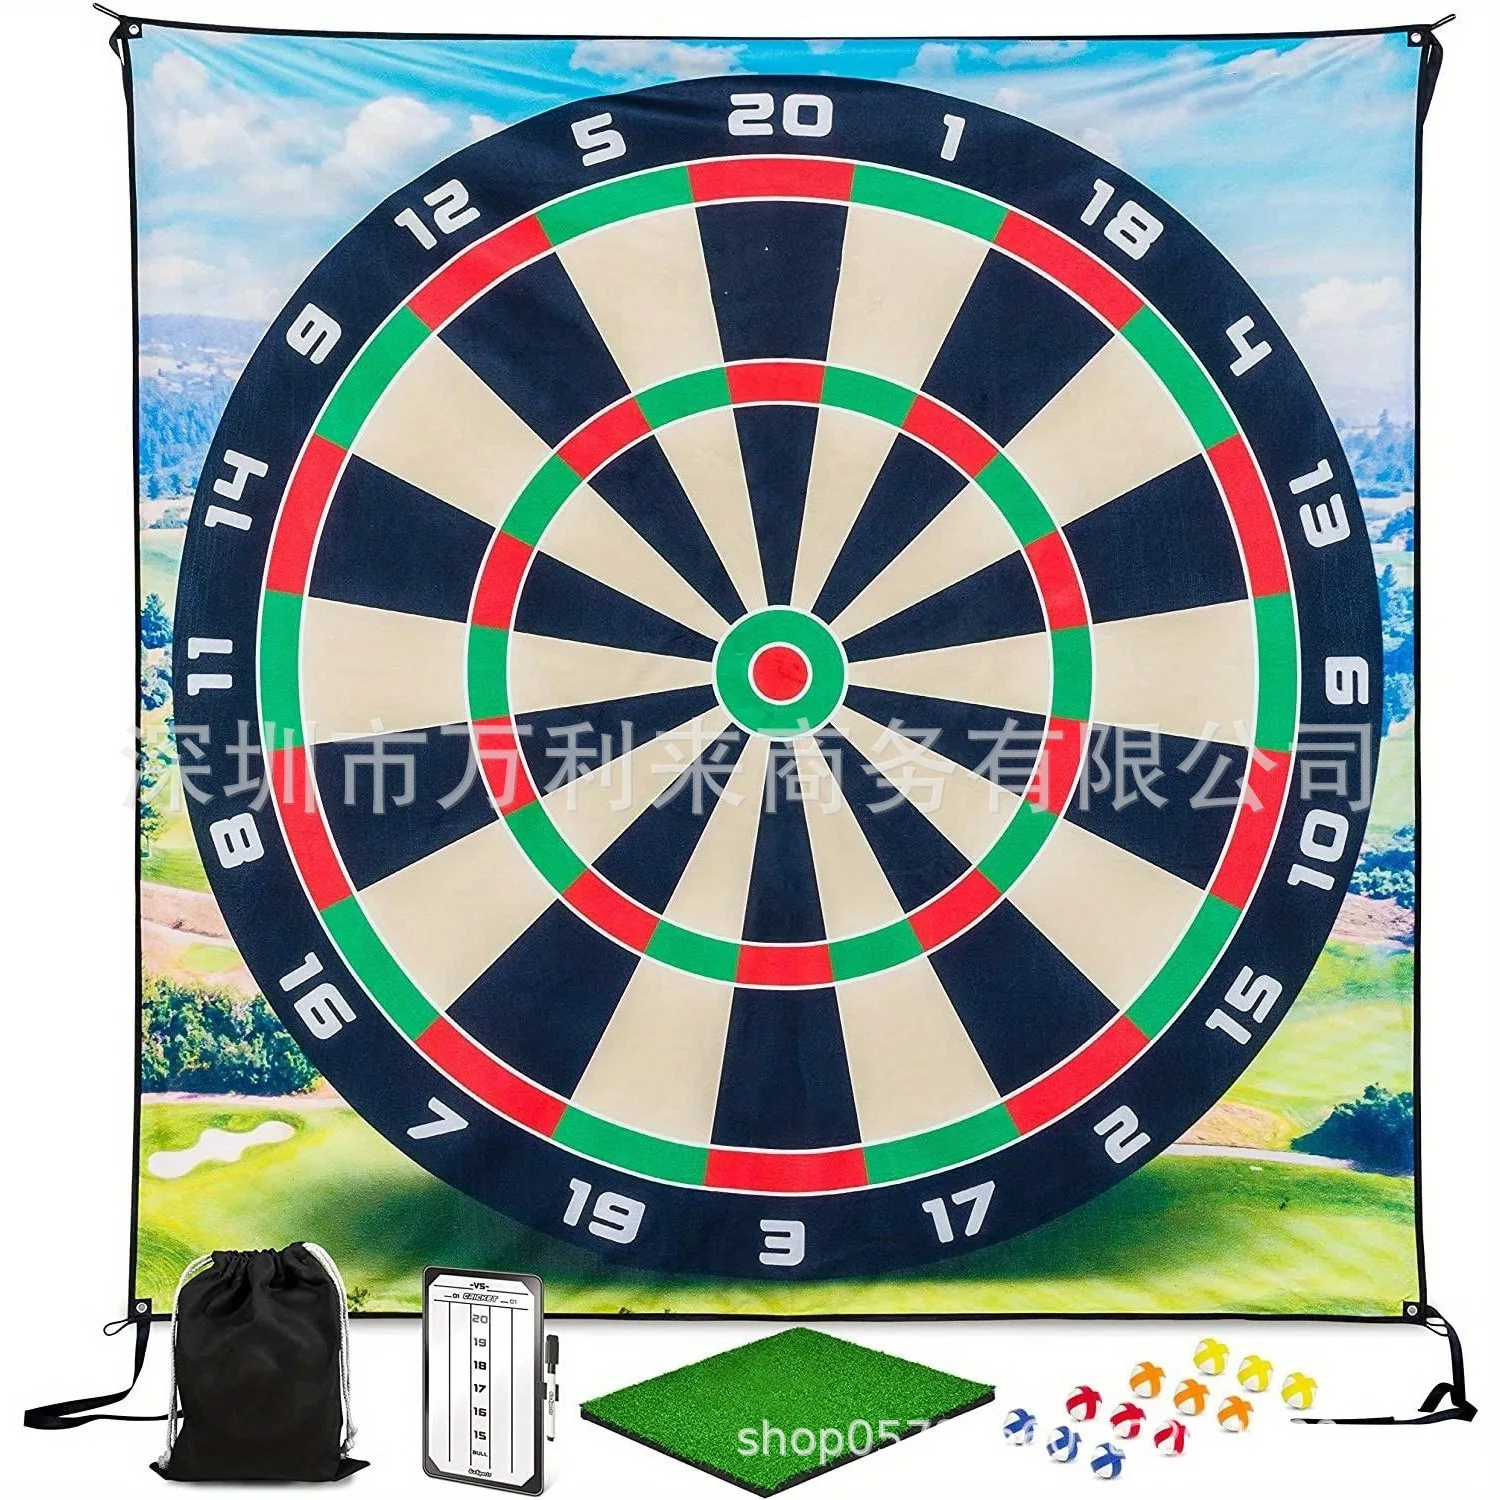 

Indoor Outdoor Practice Swing Golf Target Cloth 200 x 200 cm Hitting Hanging Circle Driving Range Training Tool